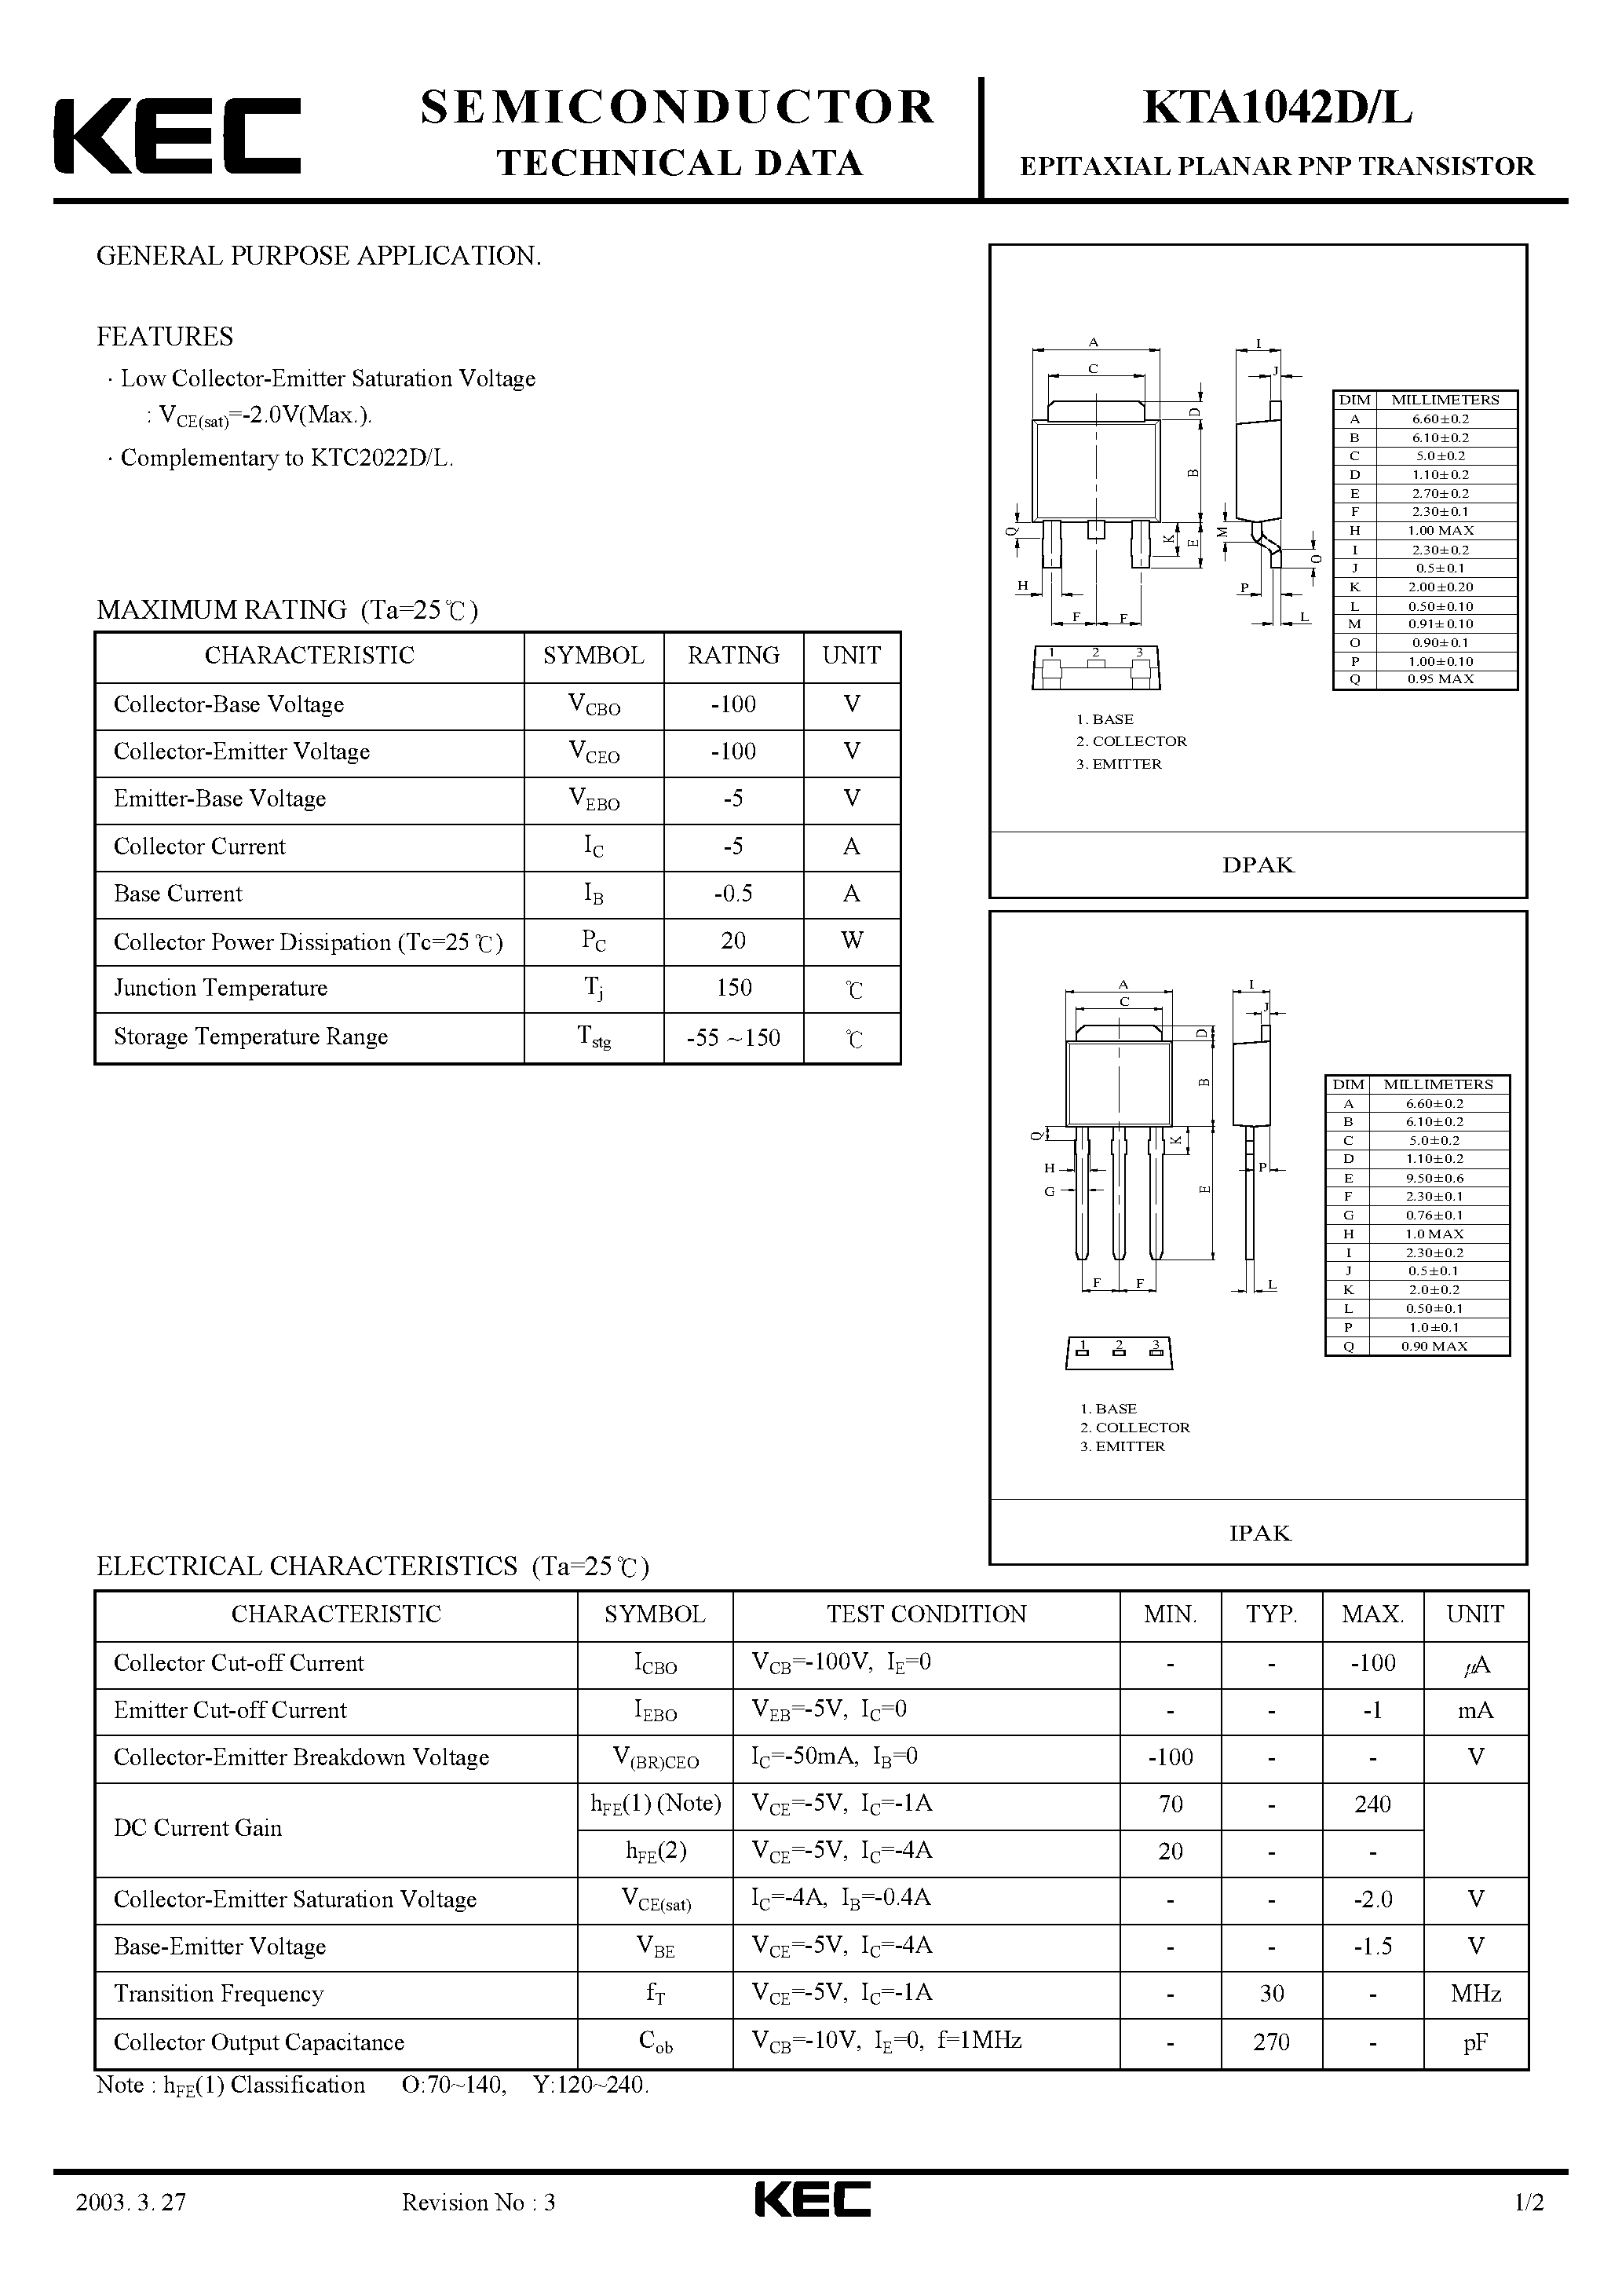 Datasheet KTA1042L - EPITAXIAL PLANAR PNP TRANSISTOR (GENERAL PURPOSE) page 1